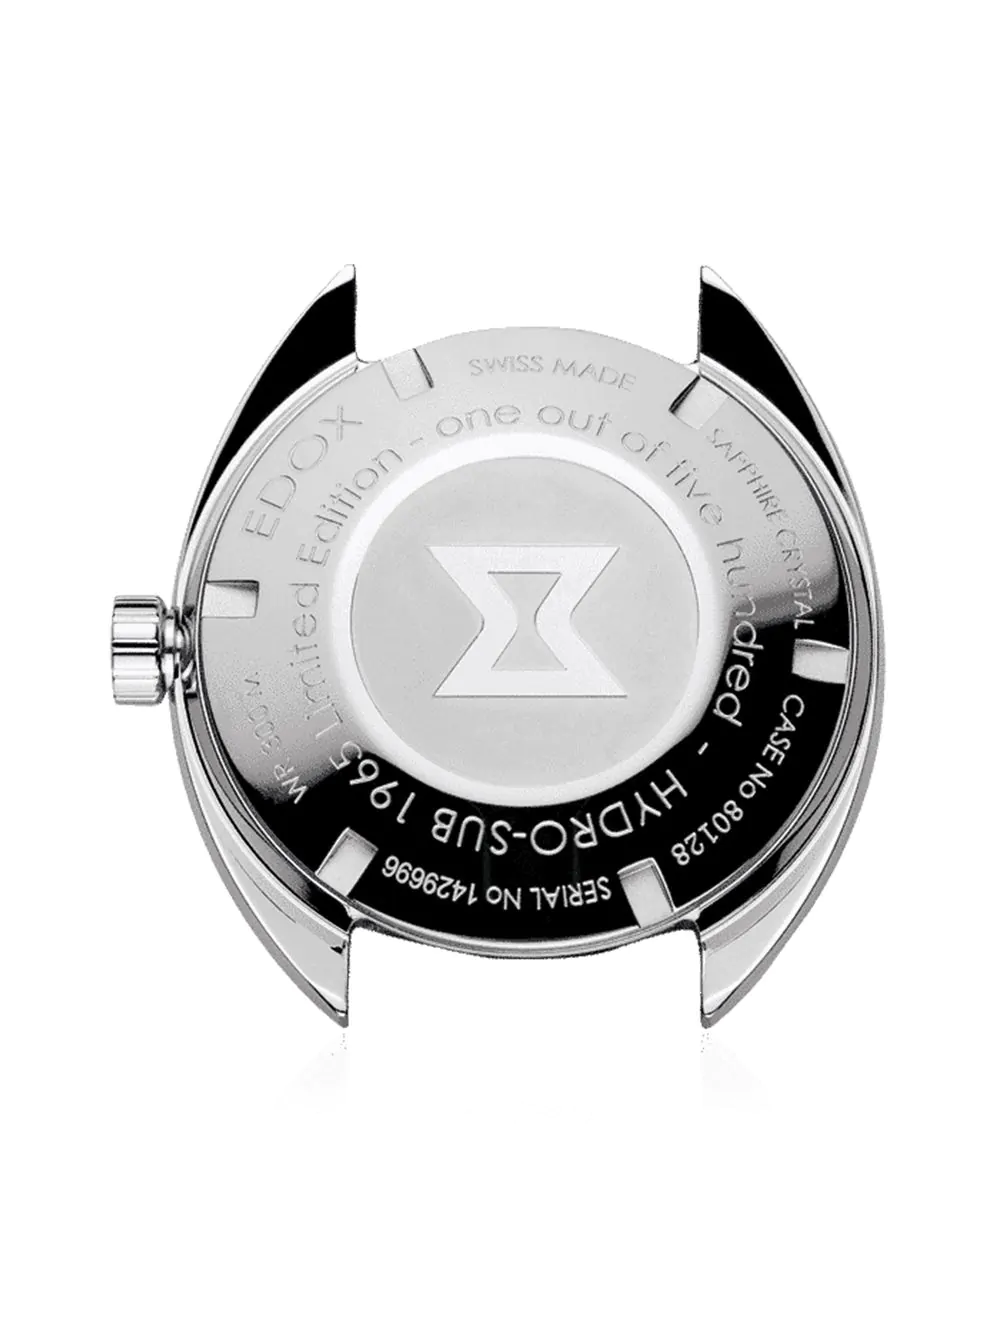 Edox 80128-357JNM-BUDD Hydo-Sub Chronometer Limited Edition